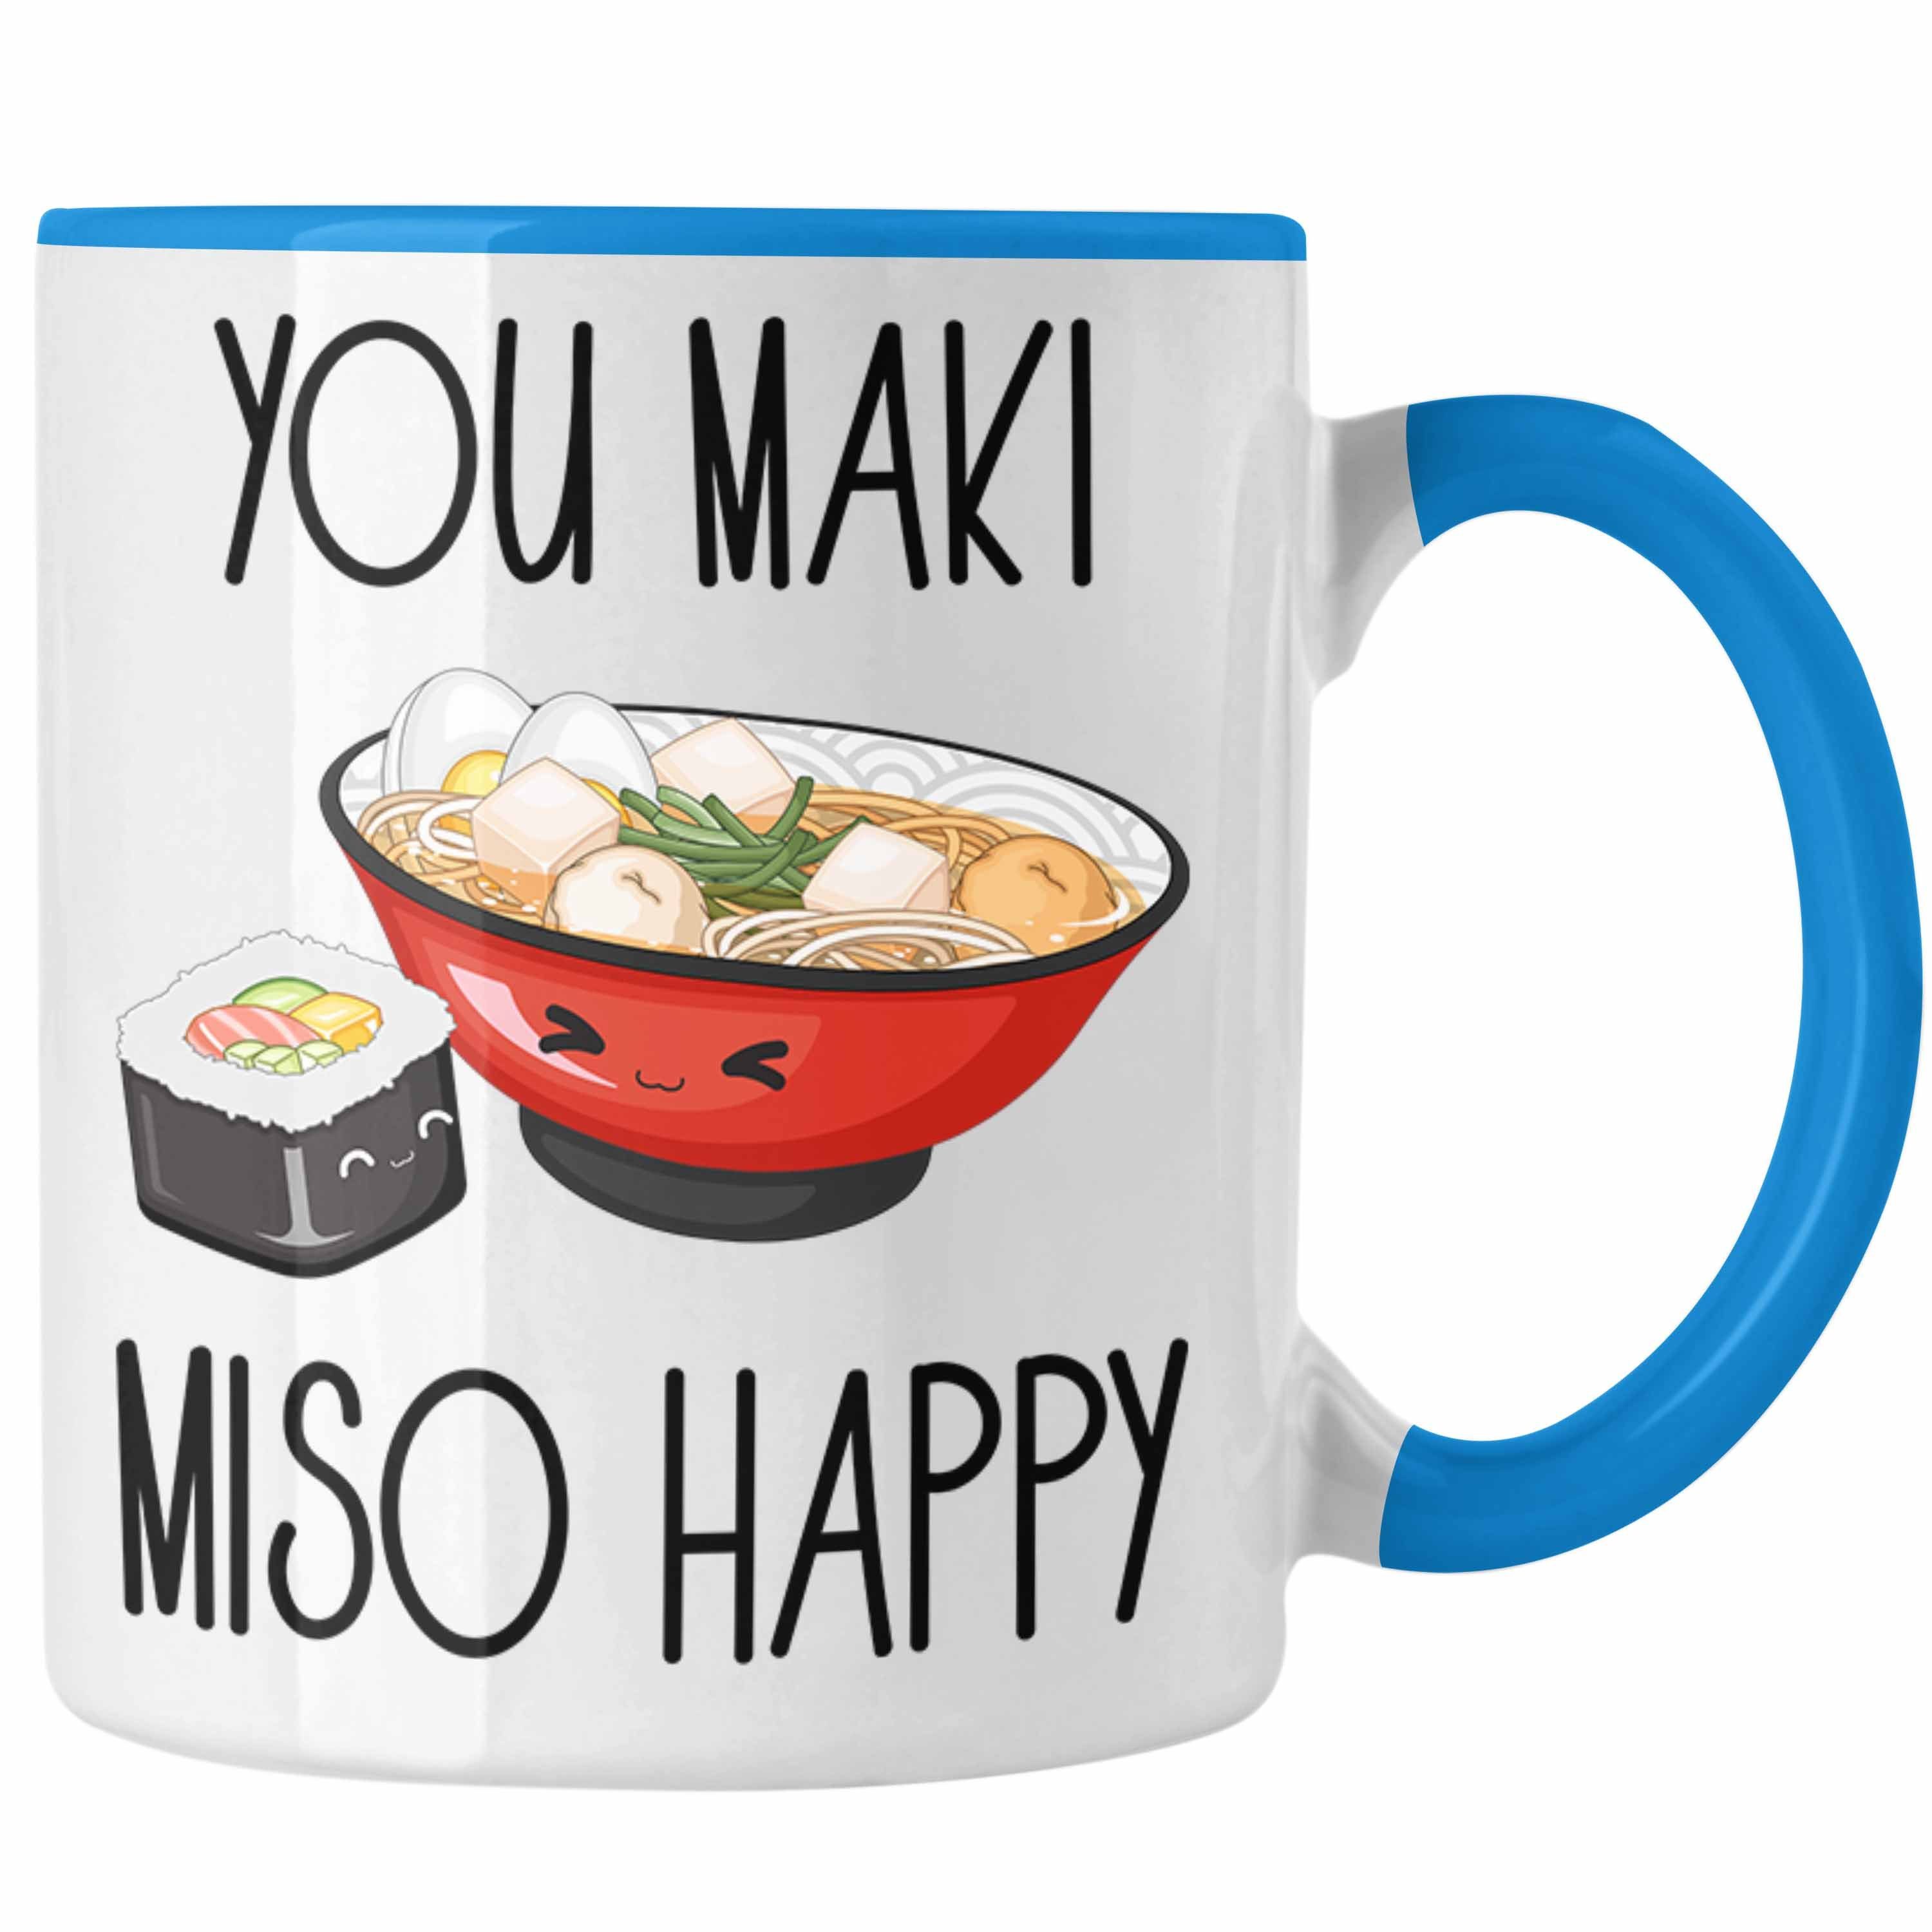 Maki Tasse Geschenk Japan Miso You Sushi Tasse Blau Trendation Happy Liebhaber Sushiliebhab